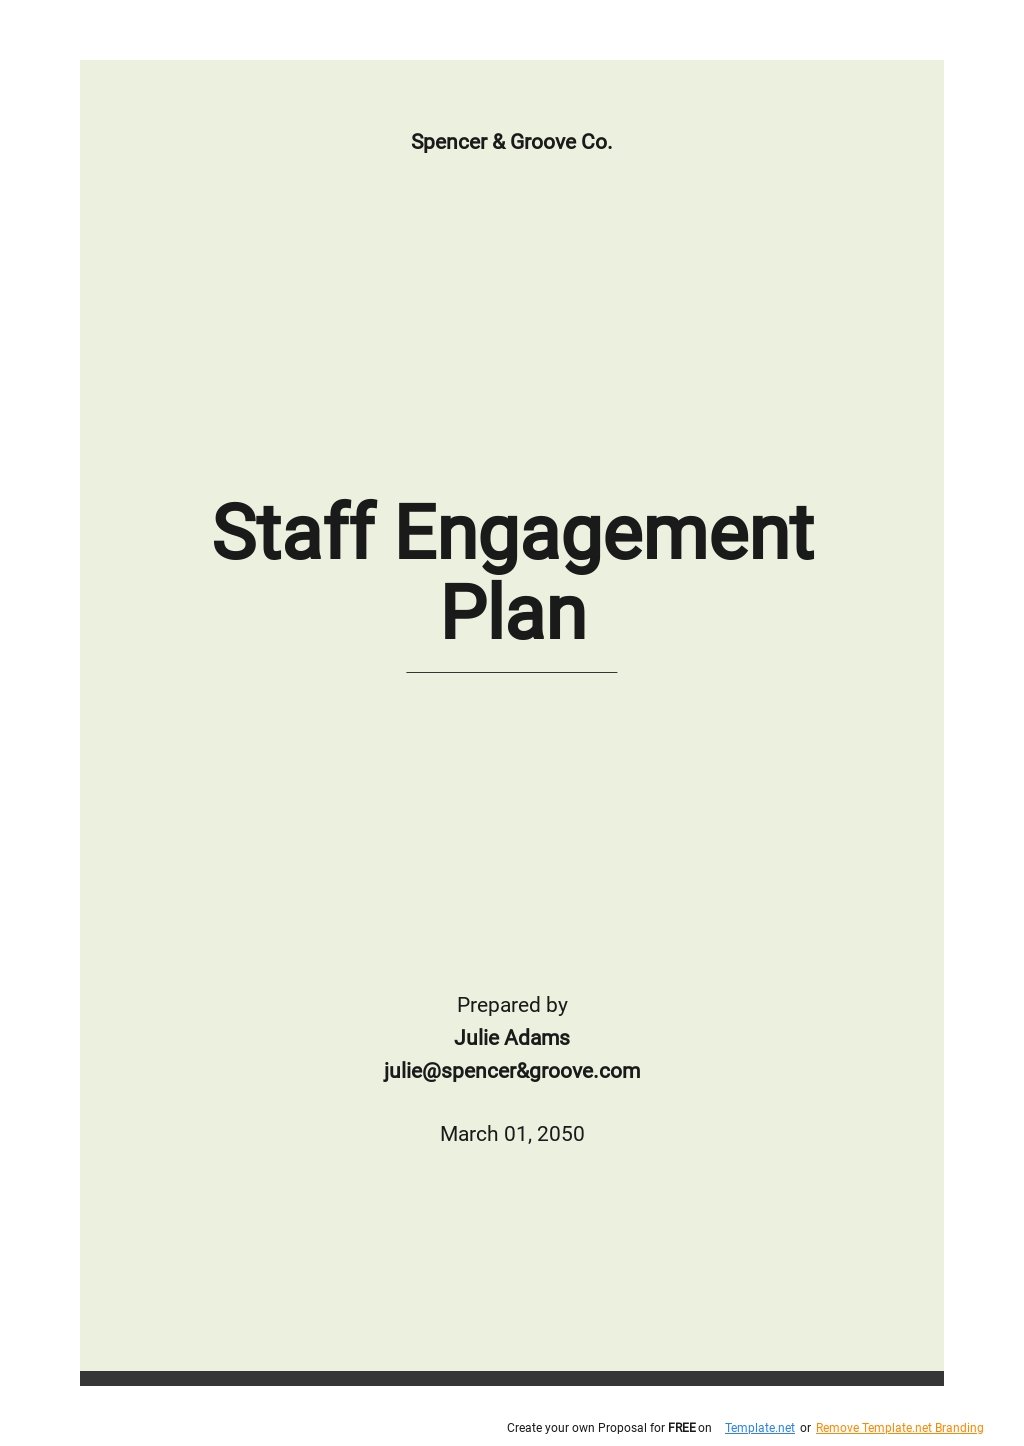 Staff Engagement Plan Template